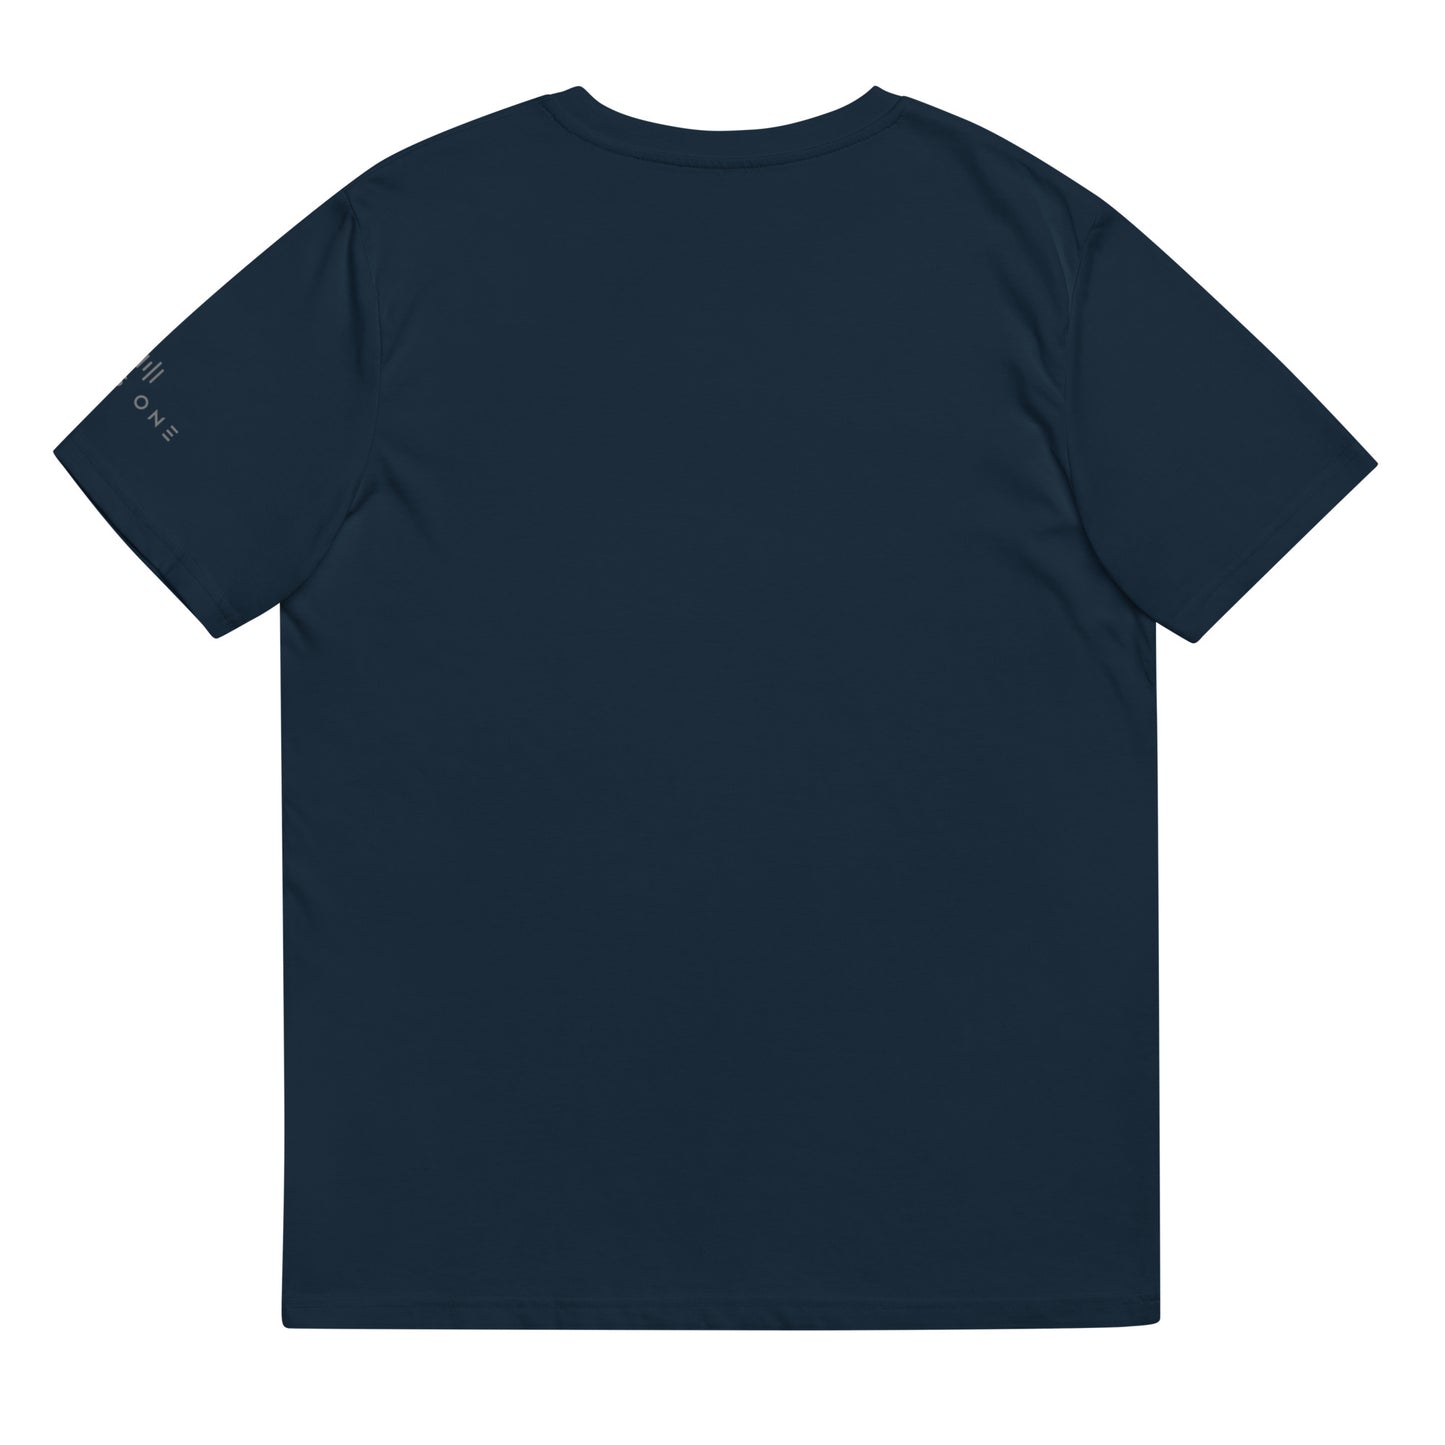 Binary State (v2) Unisex organic cotton t-shirt (Grey Text)